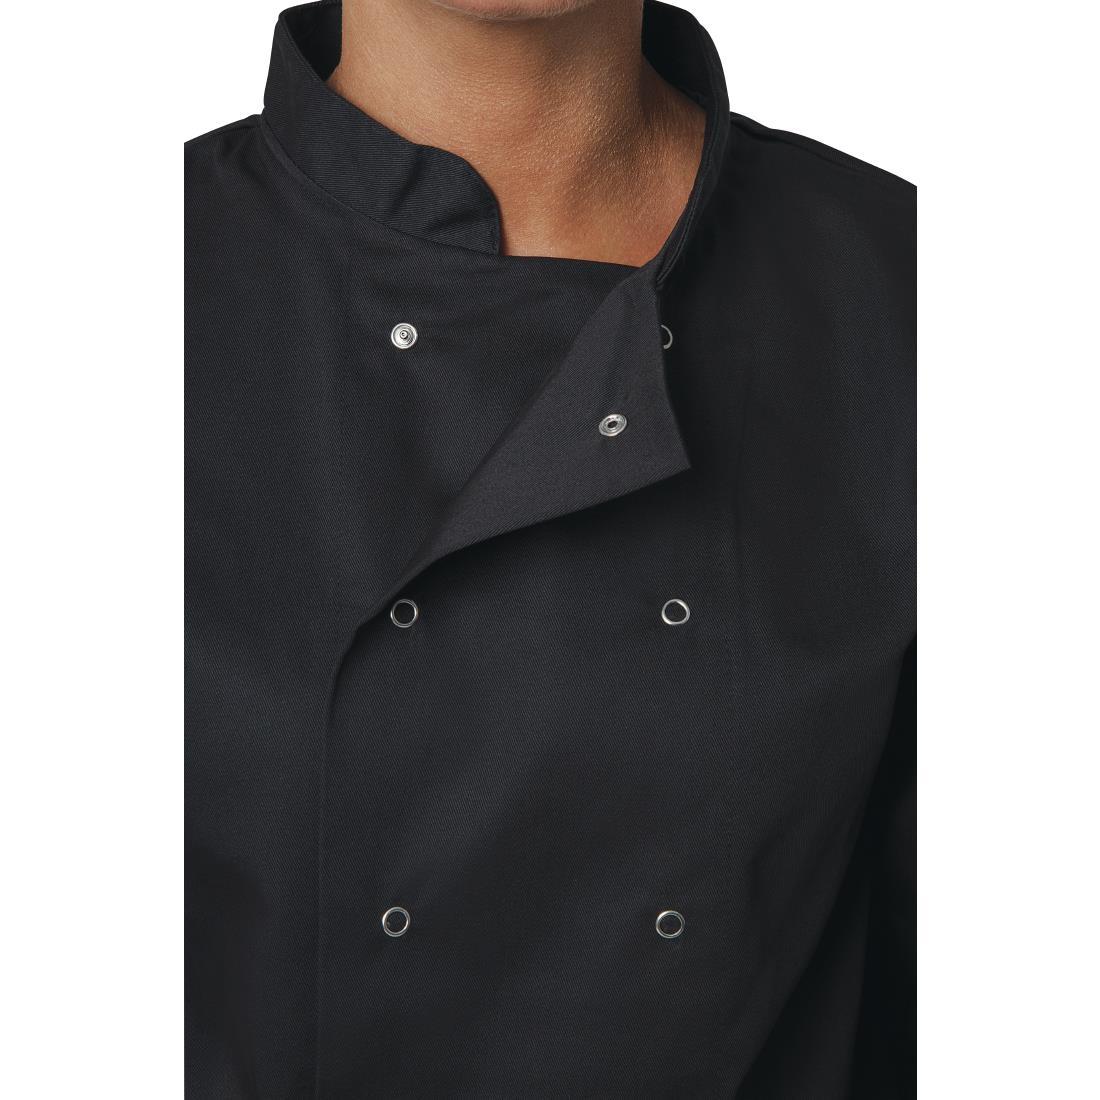 Whites Vegas Unisex Chefs Jacket Long Sleeve Black L - A438-L  - 4